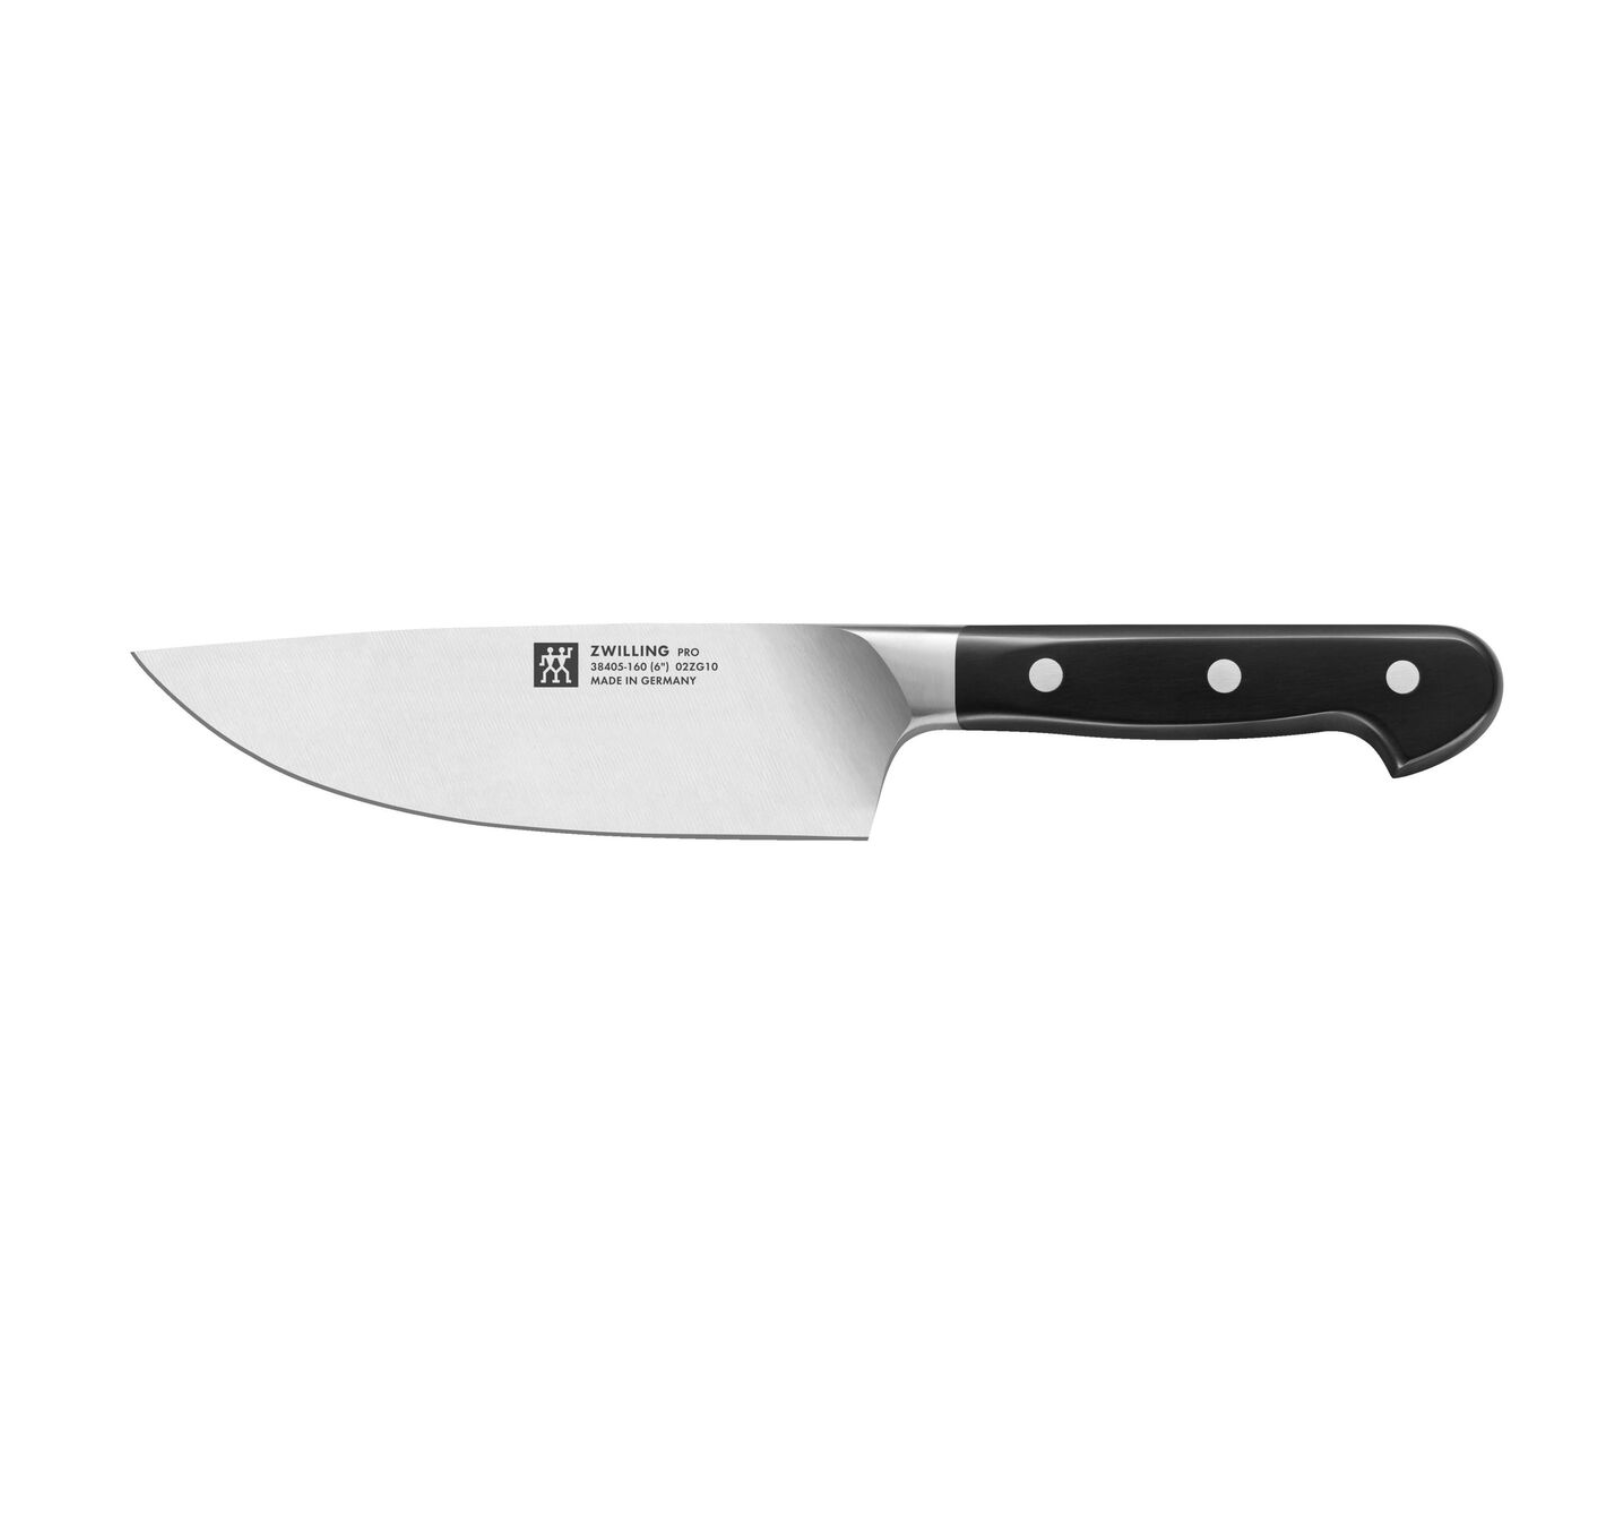 6 Inch Chef Knife